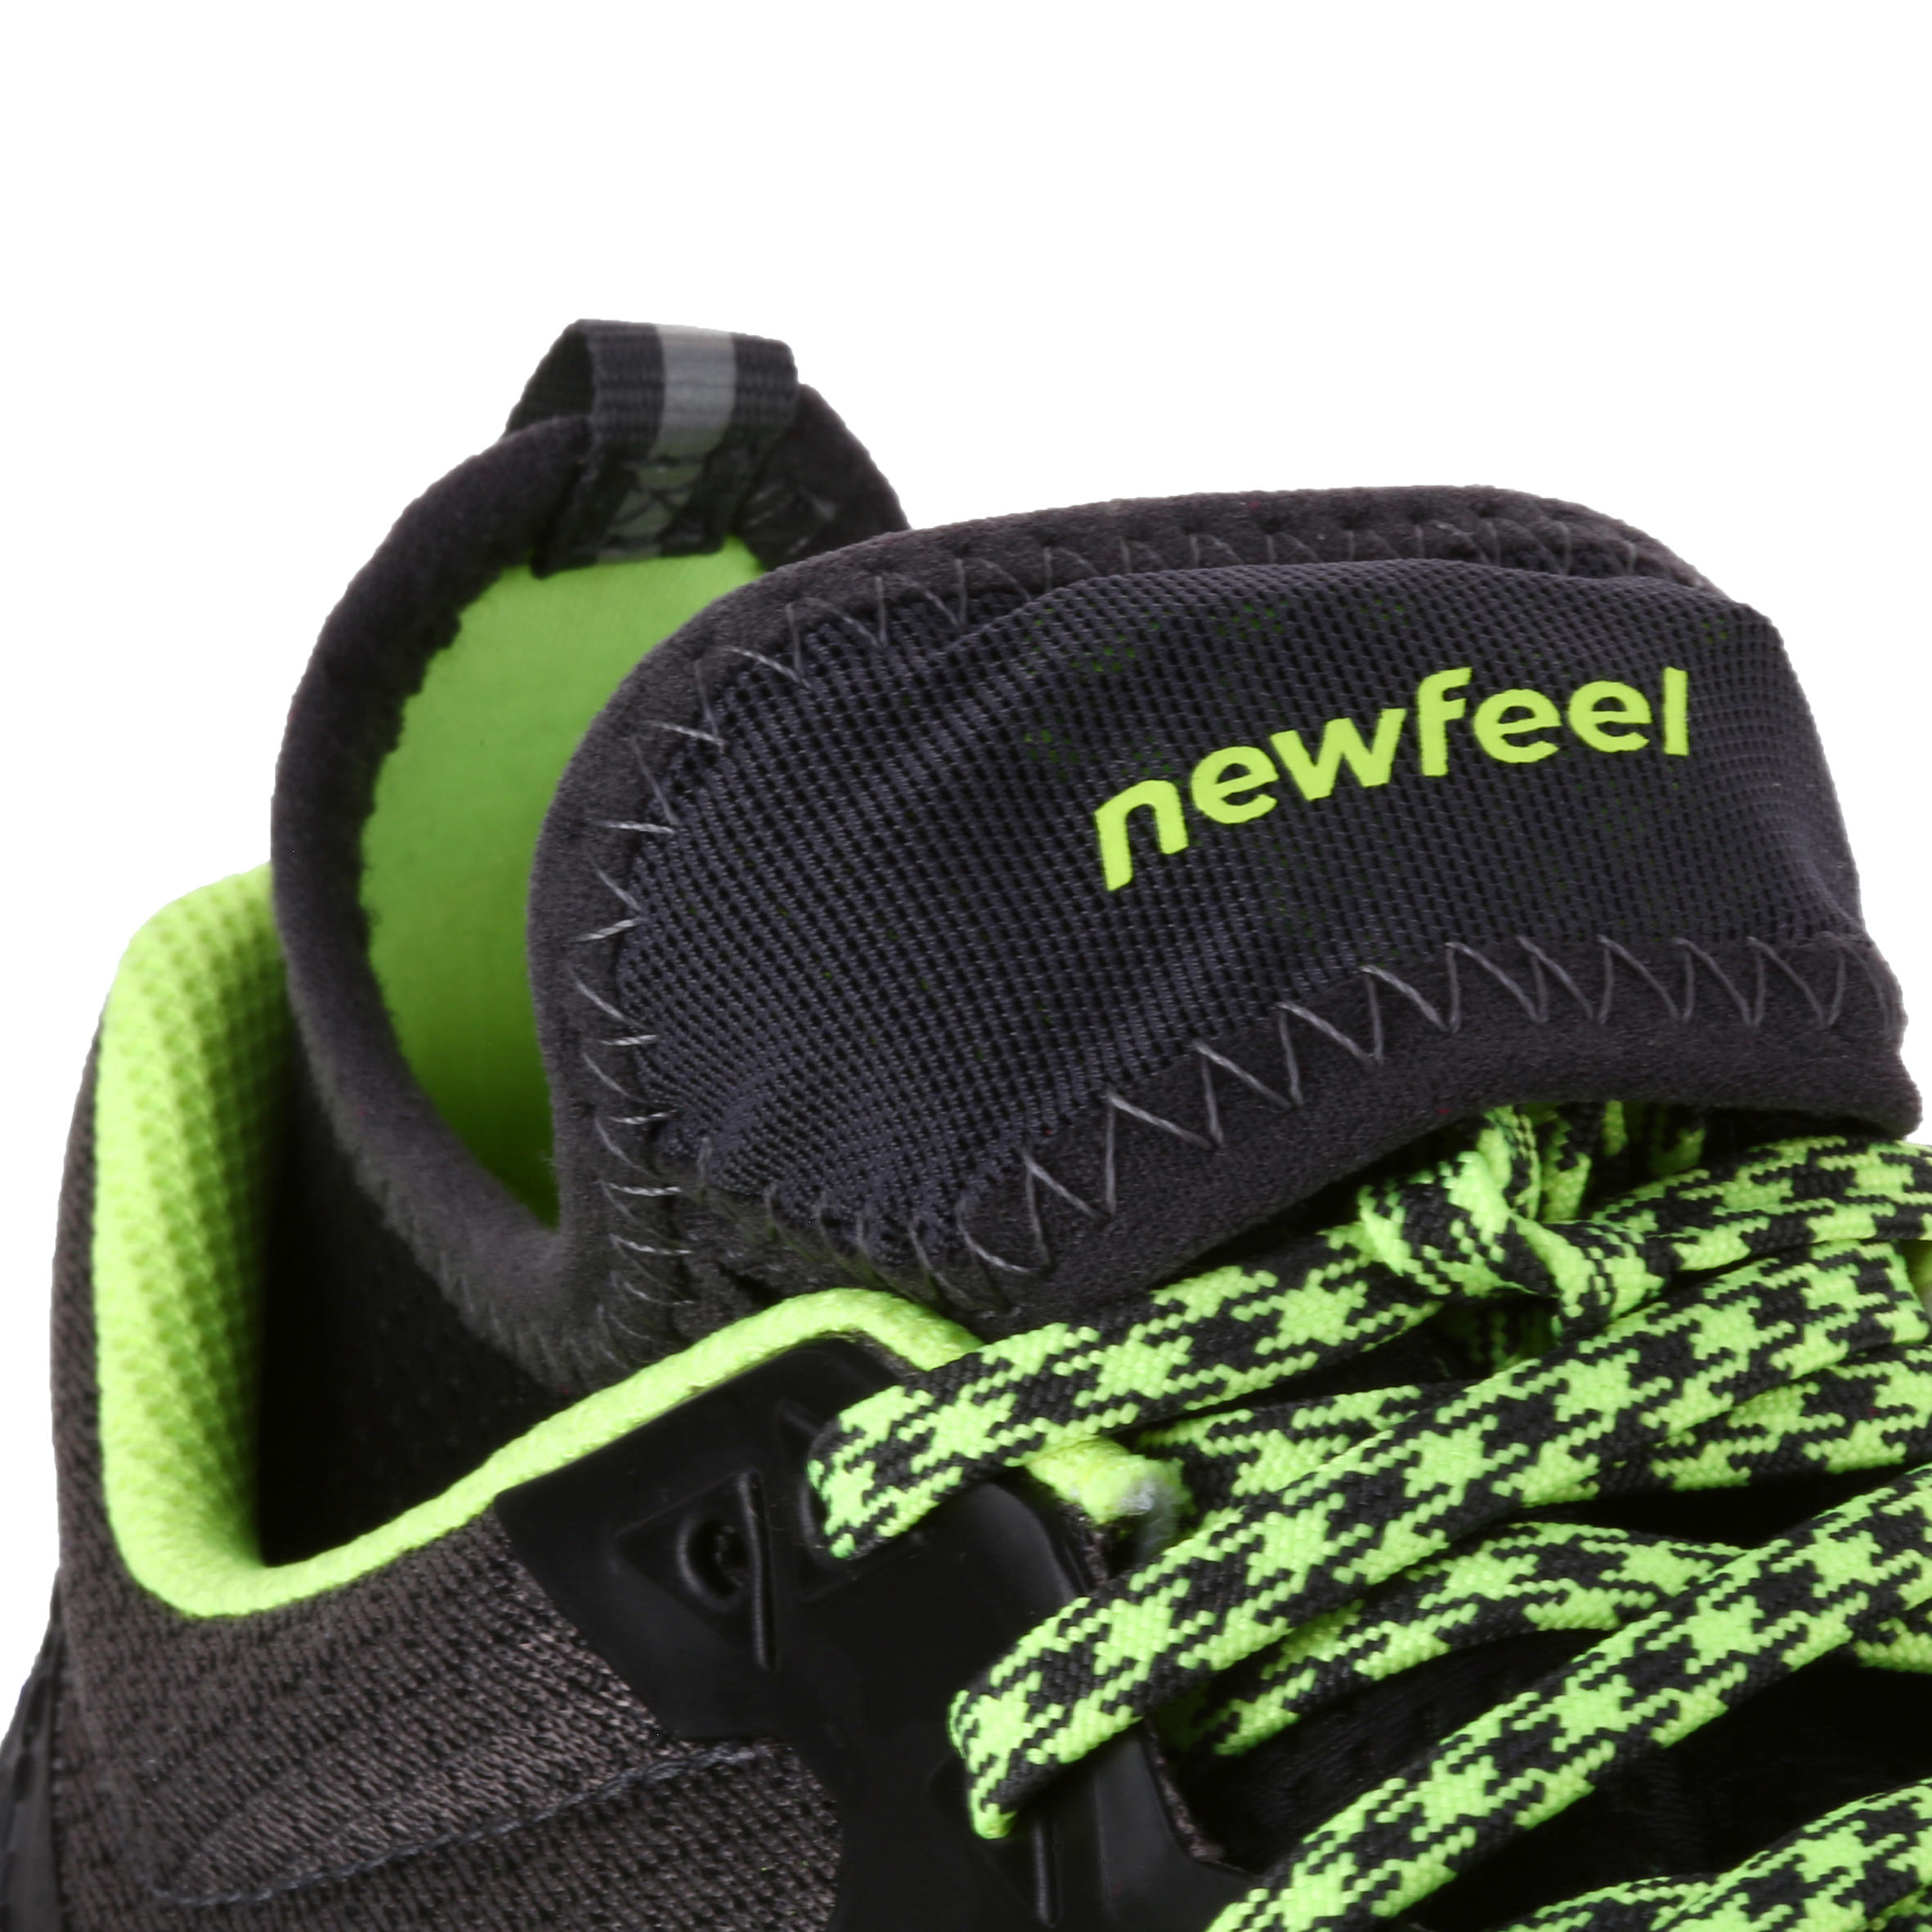 Men's Nordic Walking Shoes NW 900 Flex-H - Black/Green 5/8